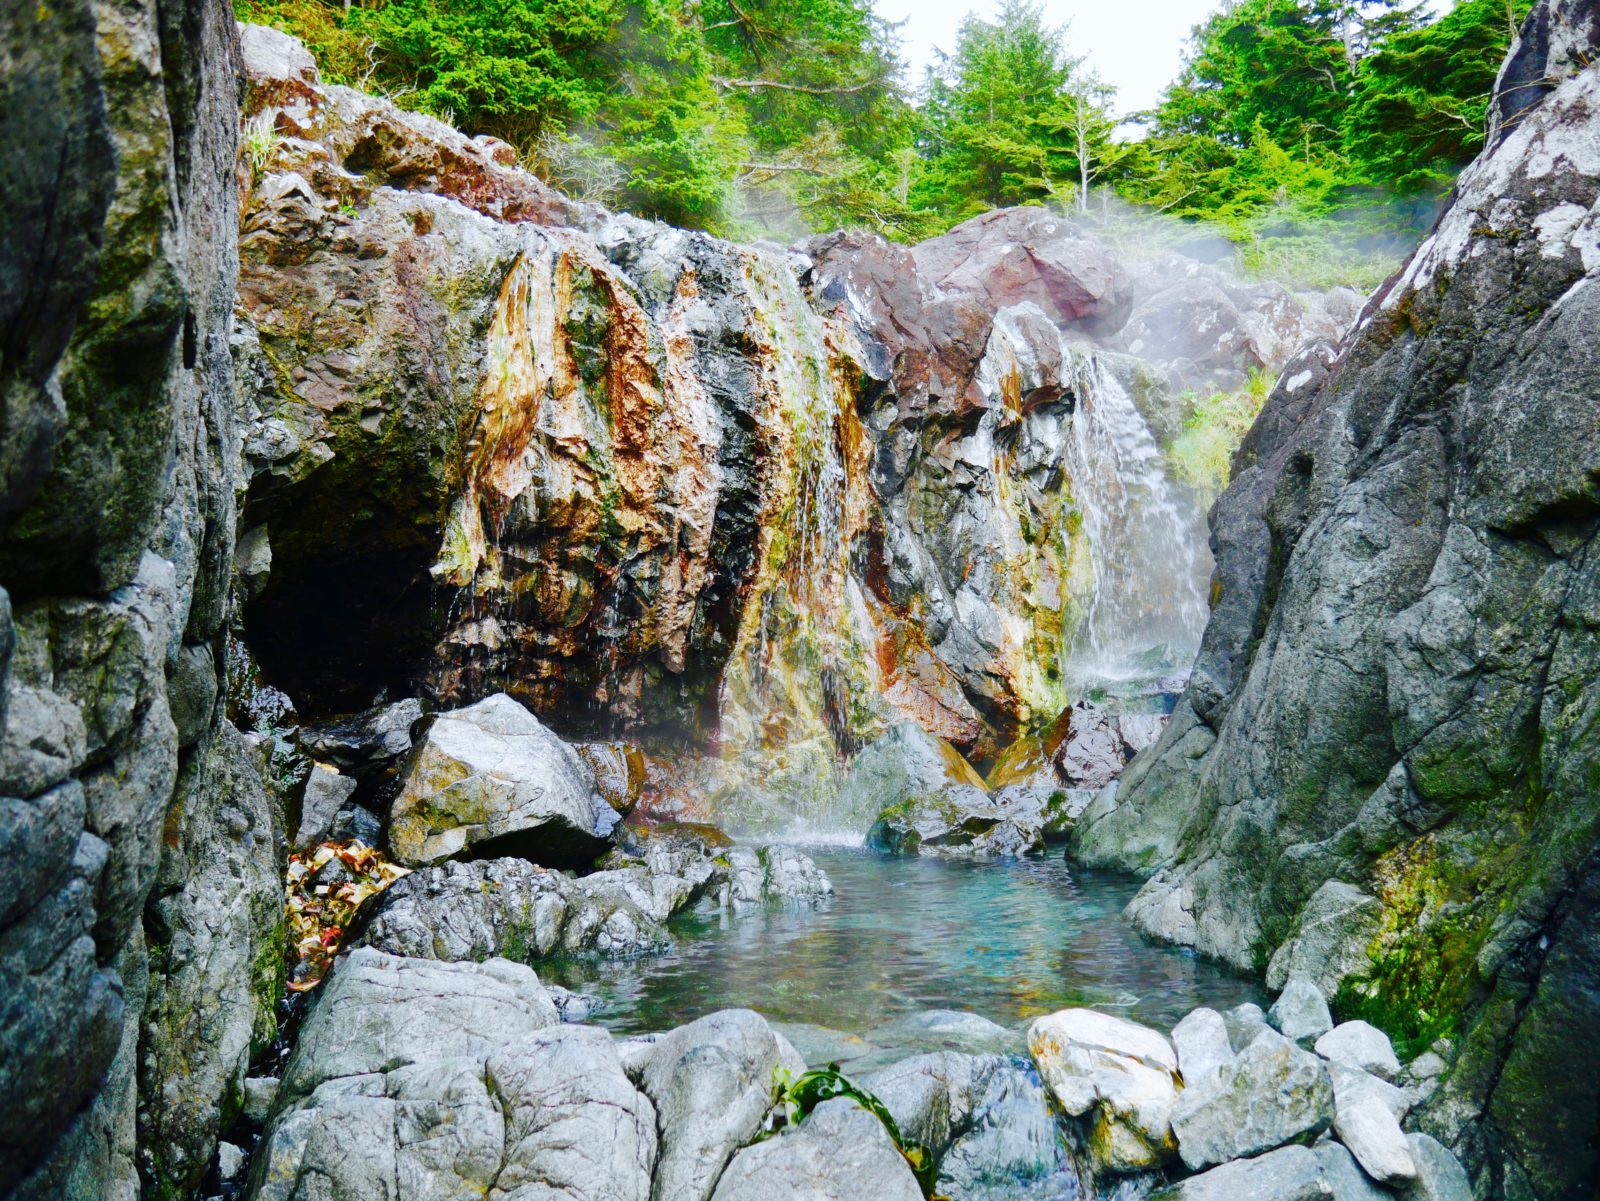 Hot Springs Cove Tofino. Baden in heißen Quellen auf Vancouver Island in Kanada